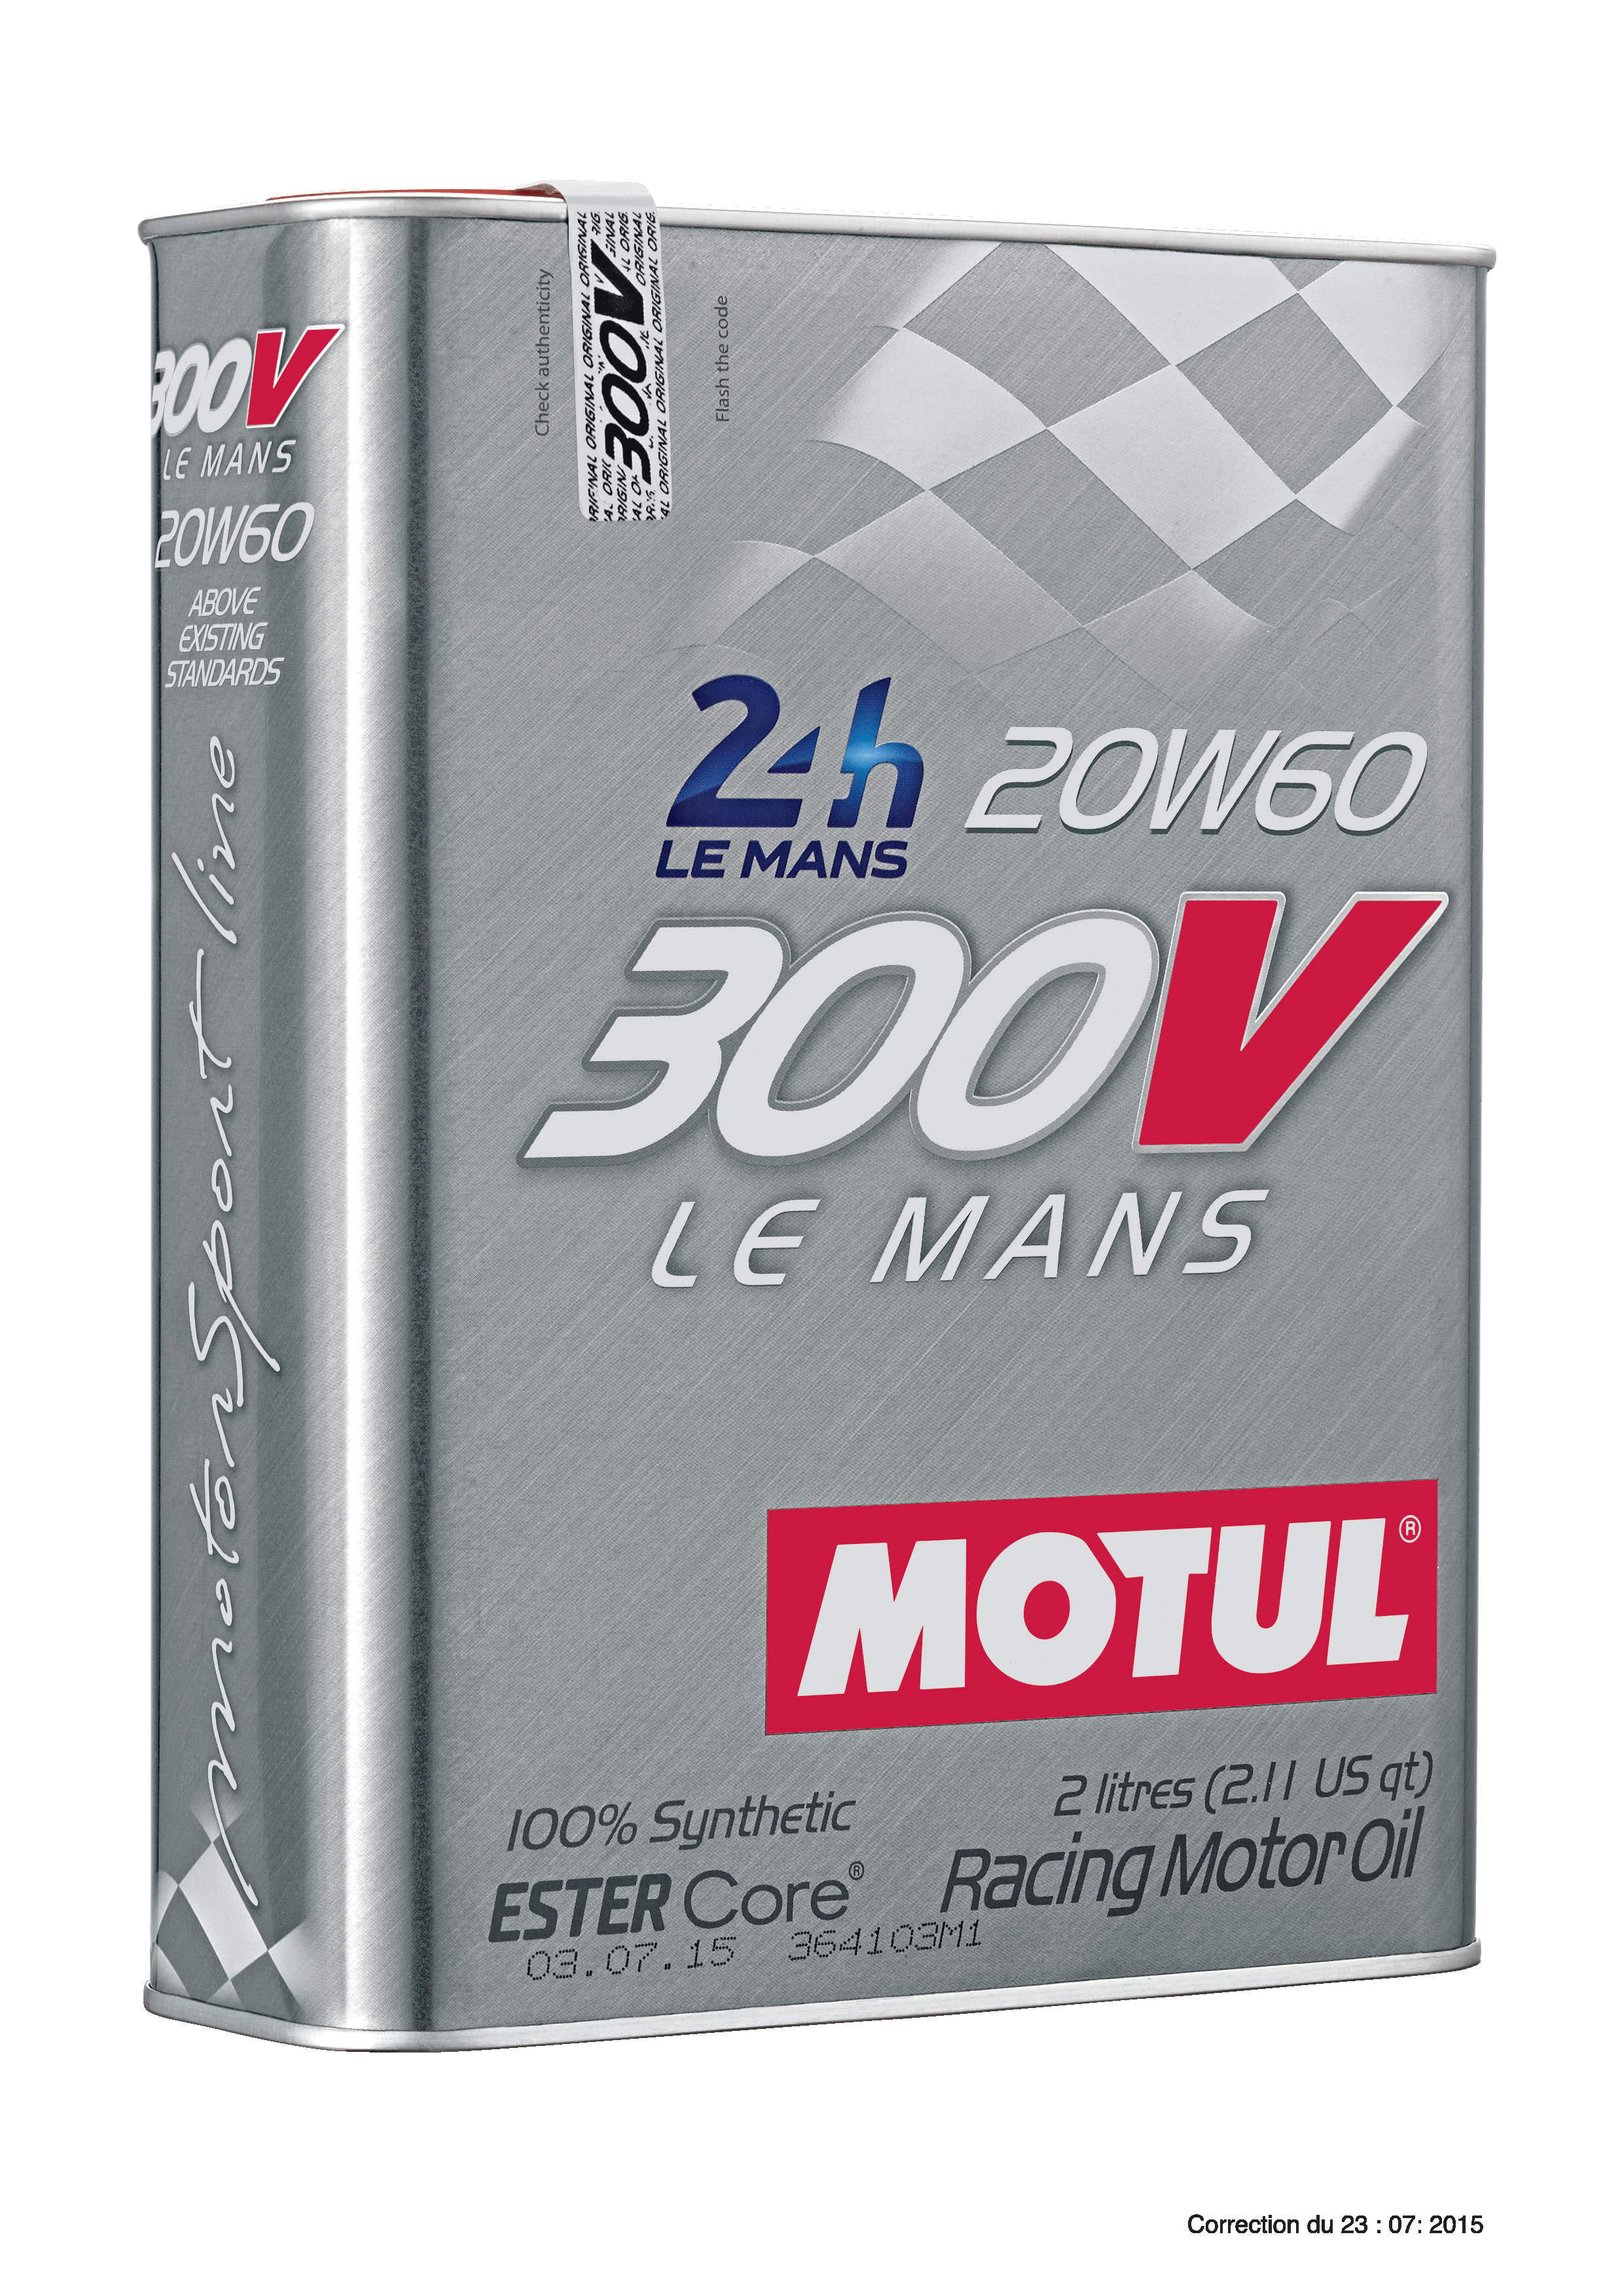 MOTUL 300V LE MANS 20W60 - 2L - Racing Engine Oil